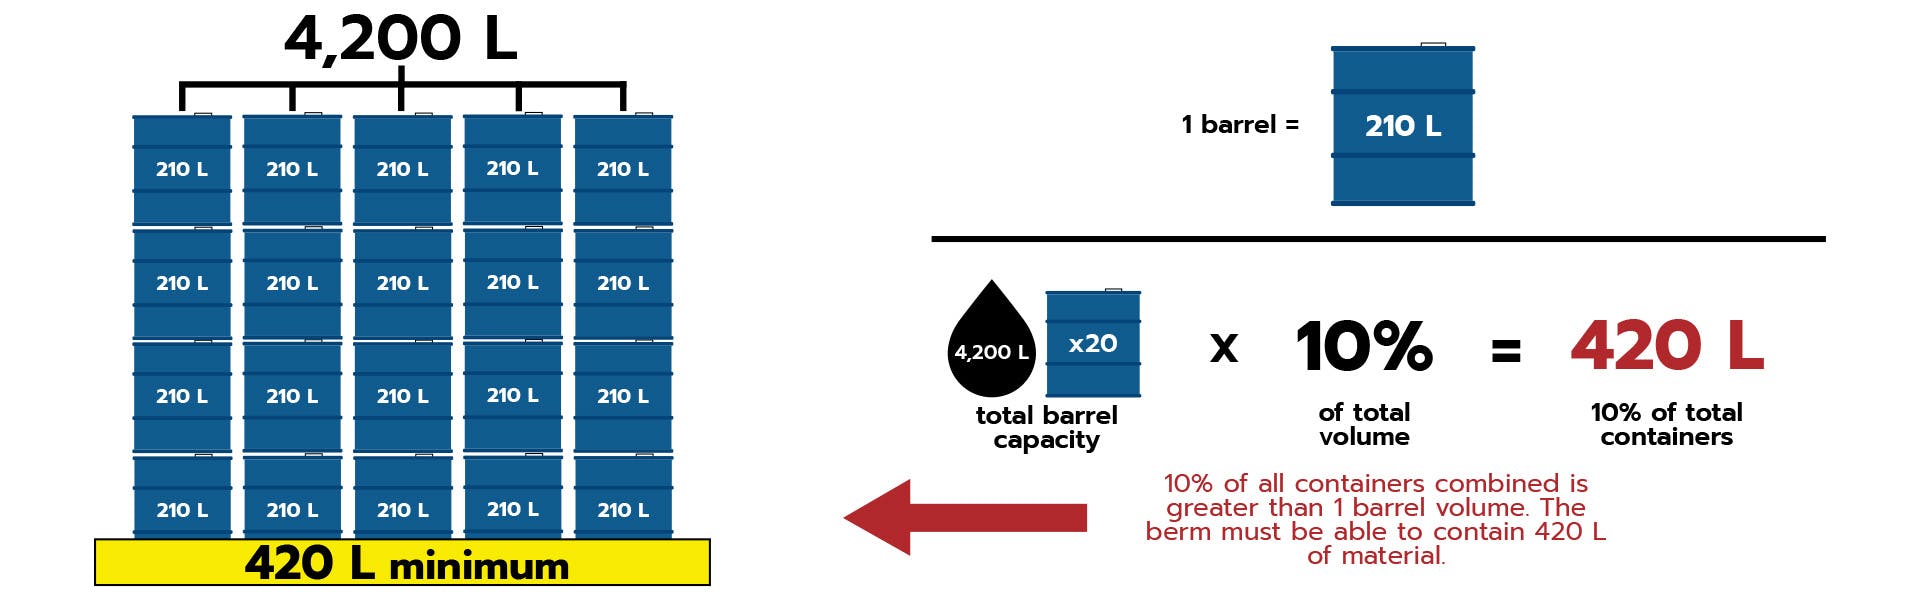 secondary berm capacity containment twenty barrels article